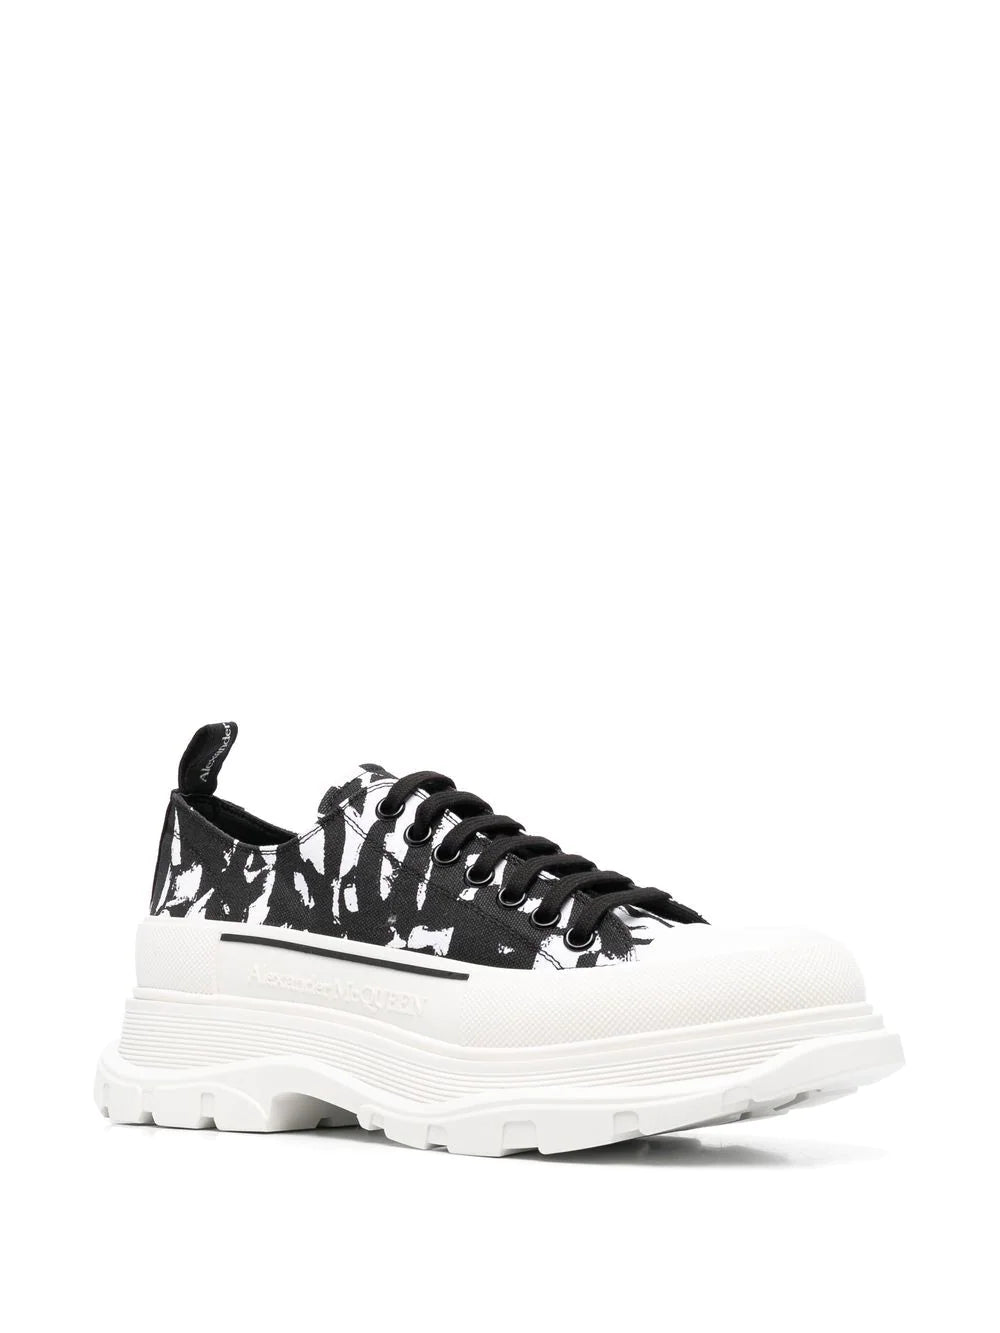 ALEXANDER MCQUEEN Tread Slick Abstract Print Sneakers Black/White - MAISONDEFASHION.COM